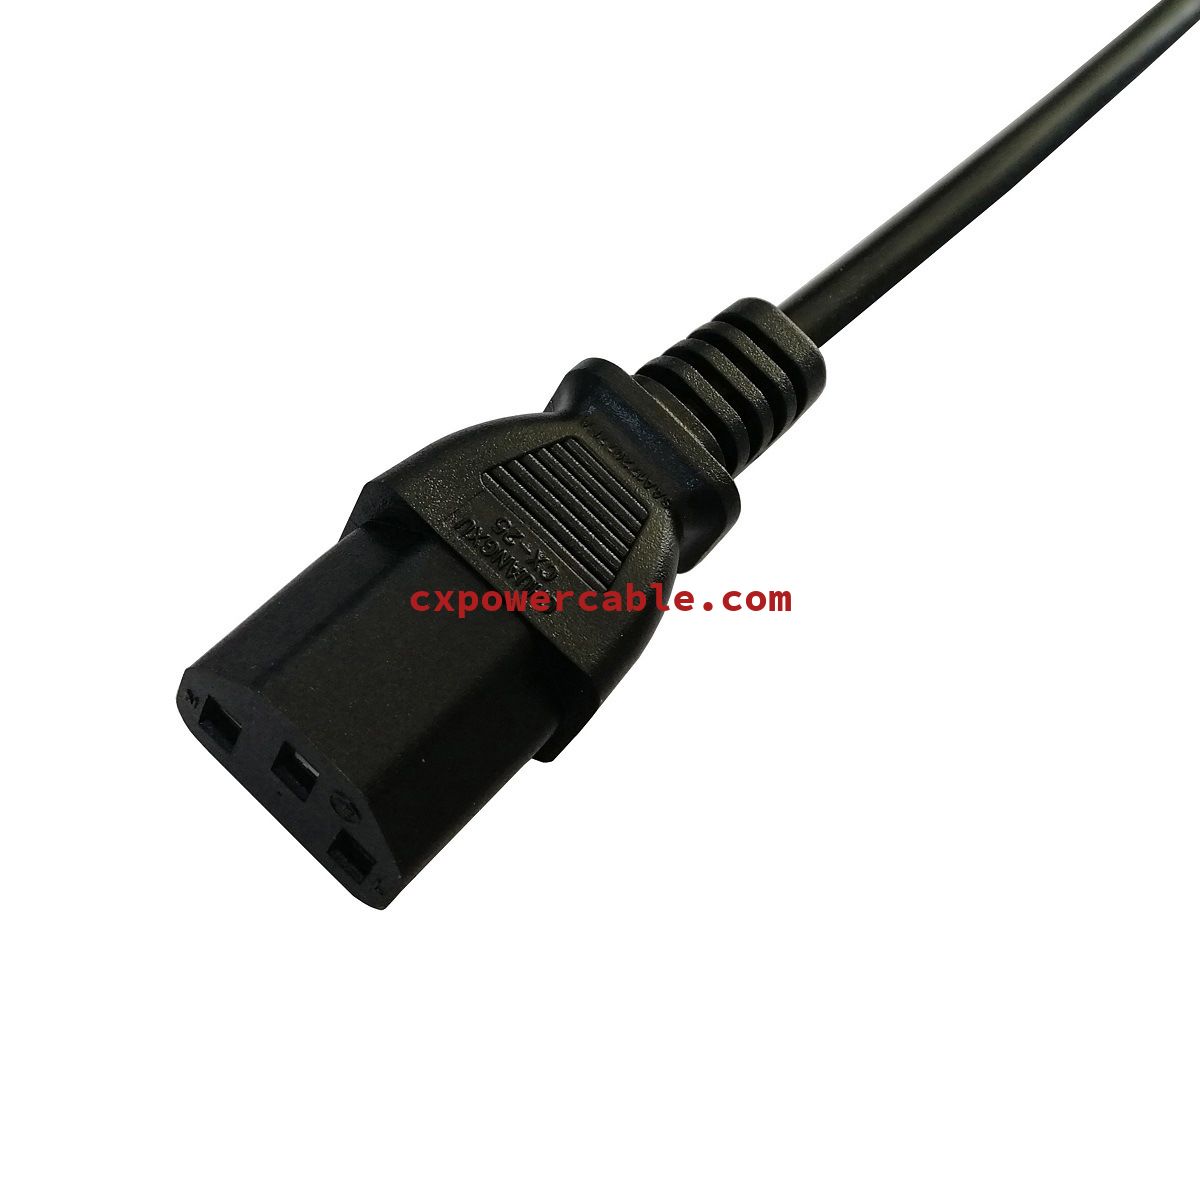 French 2pin plug + 3pin tail plug power cable